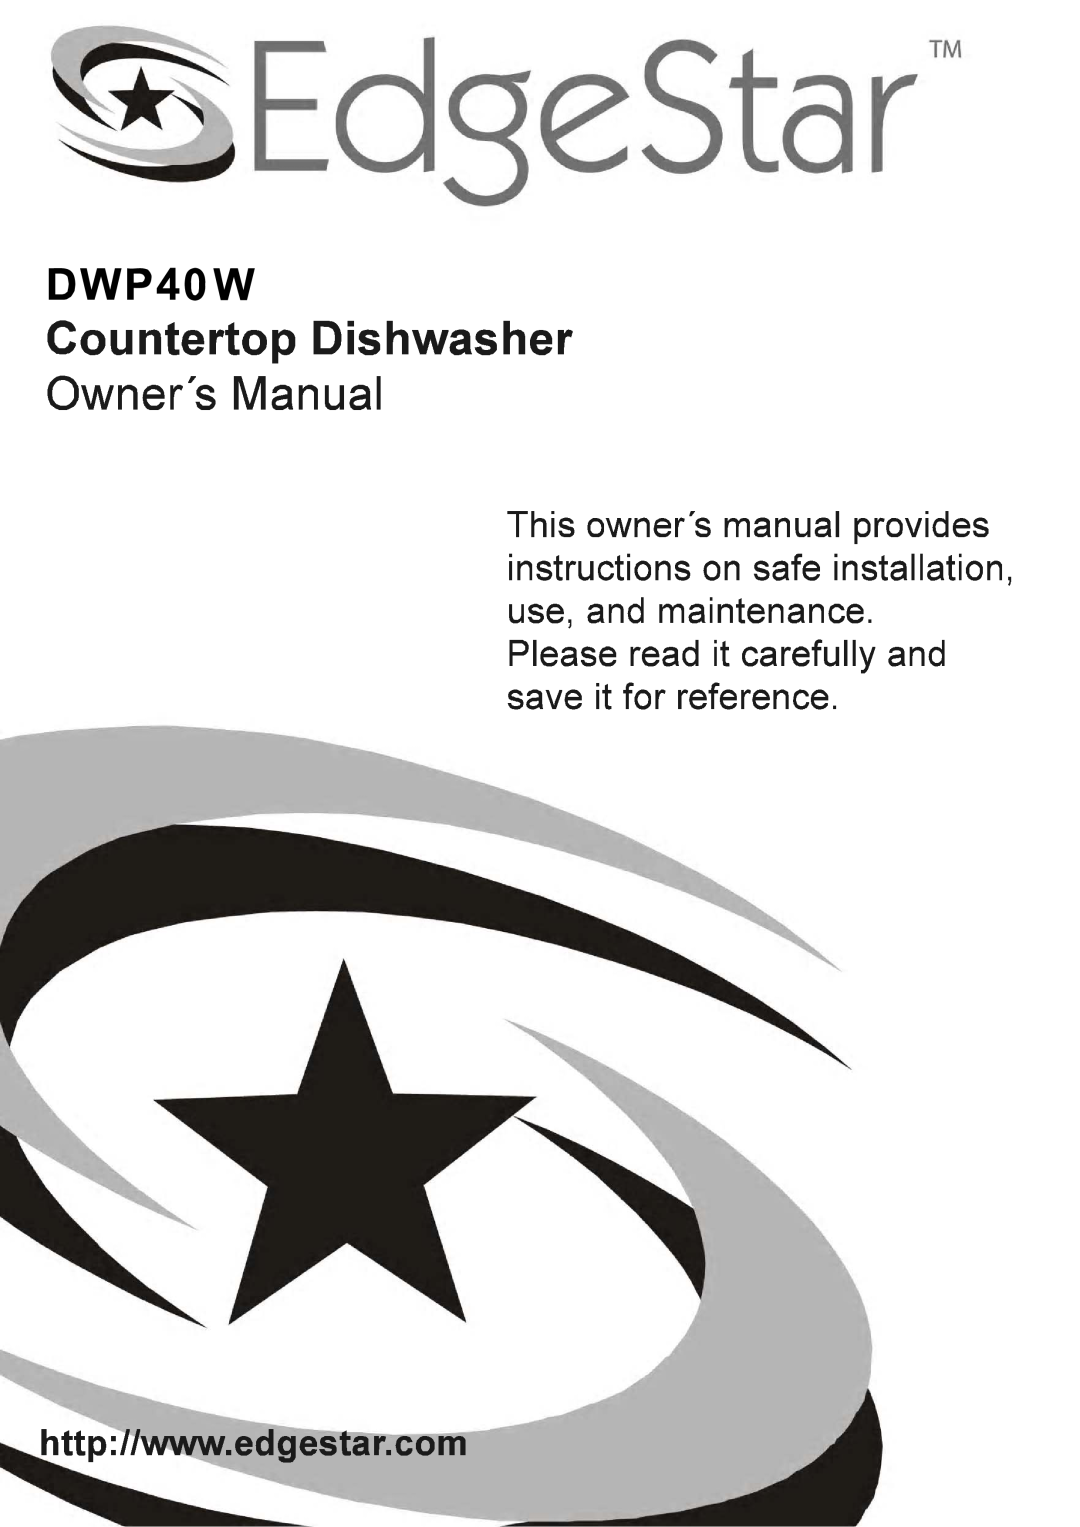 EdgeStar DWP40W manual 